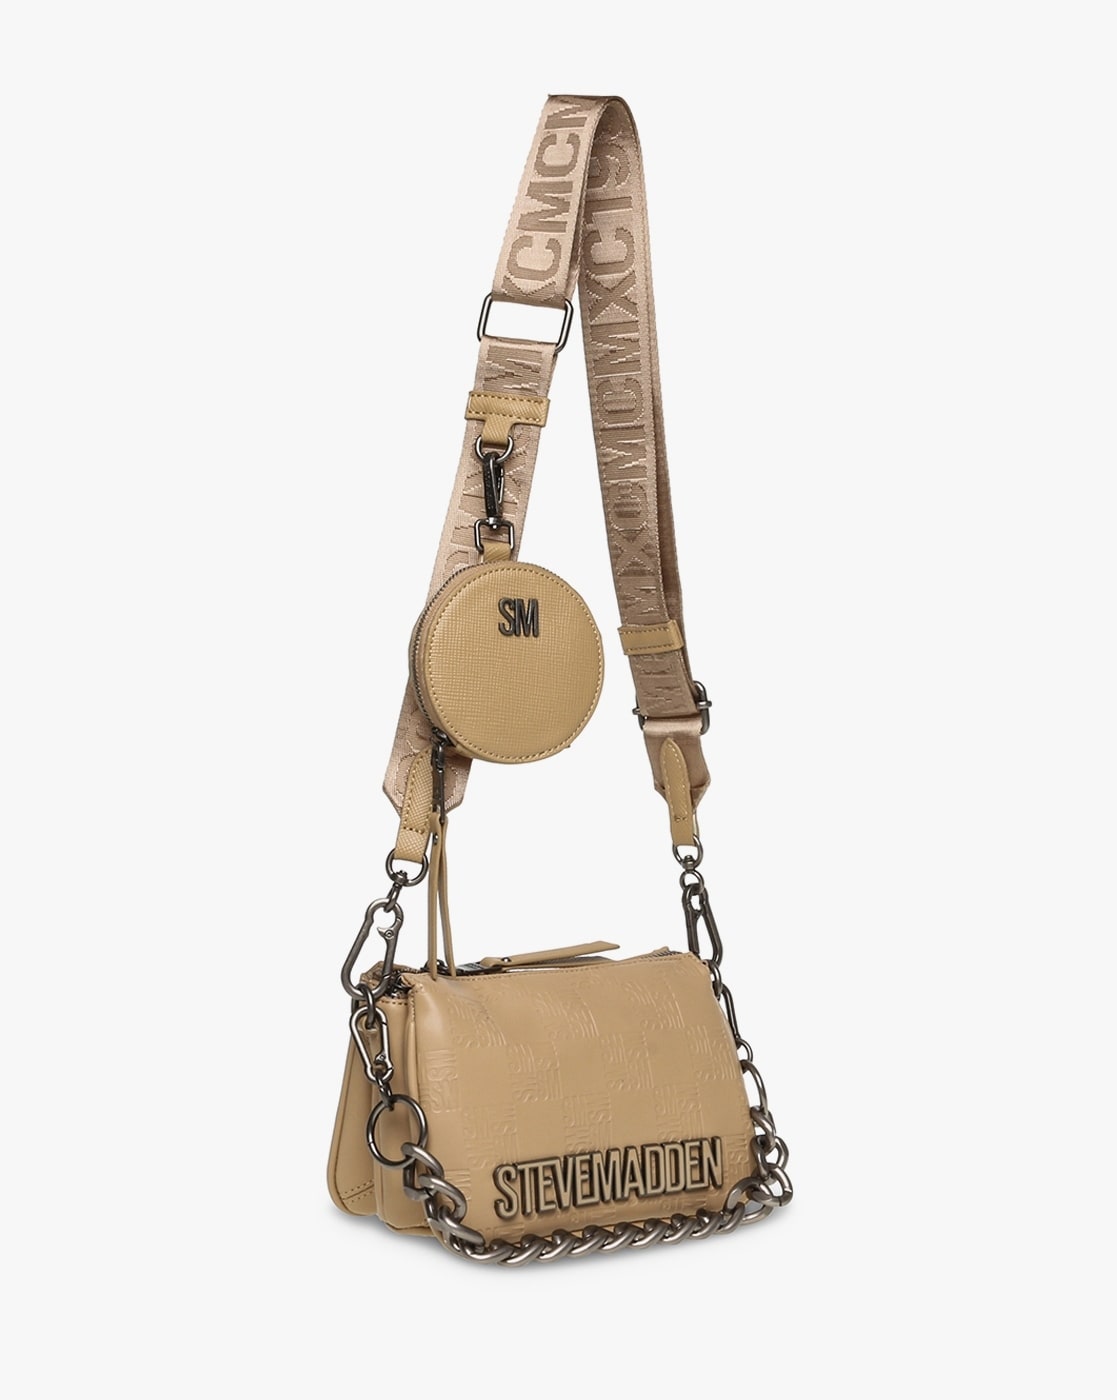 Buy Black Handbags for Women by STEVE MADDEN Online | Ajio.com